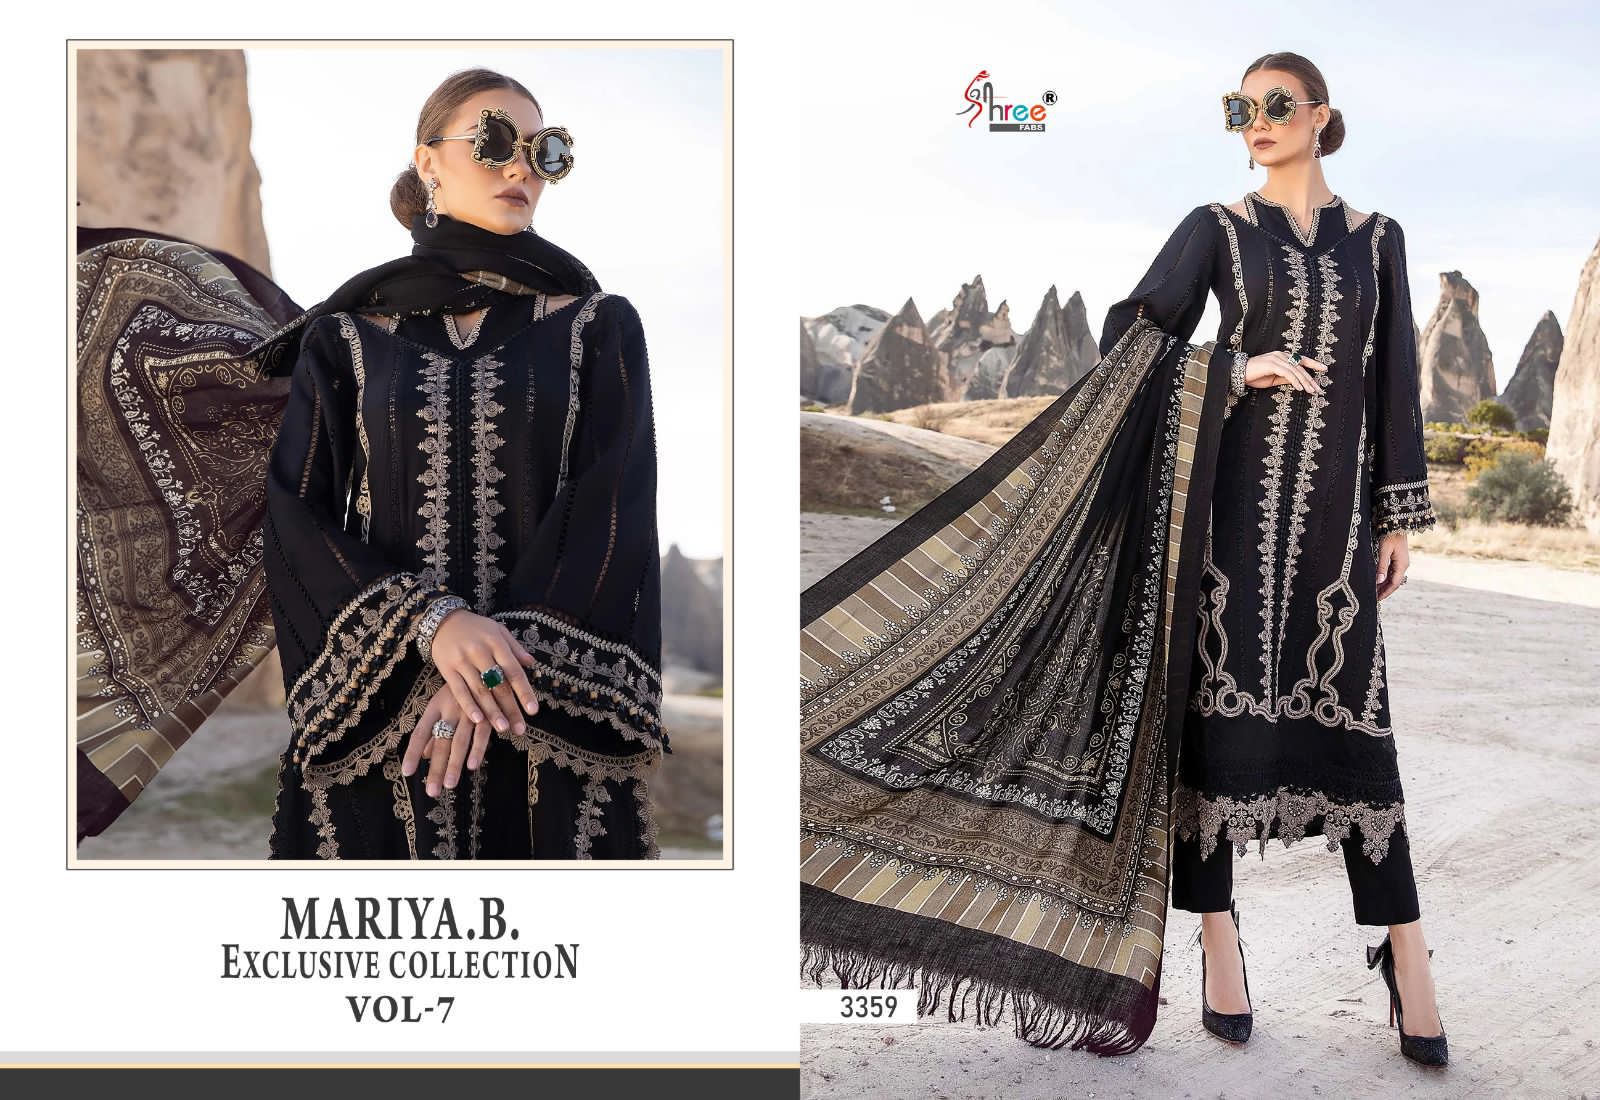 Shree Mariya B Exclusive Collection Vol 7 collection 1